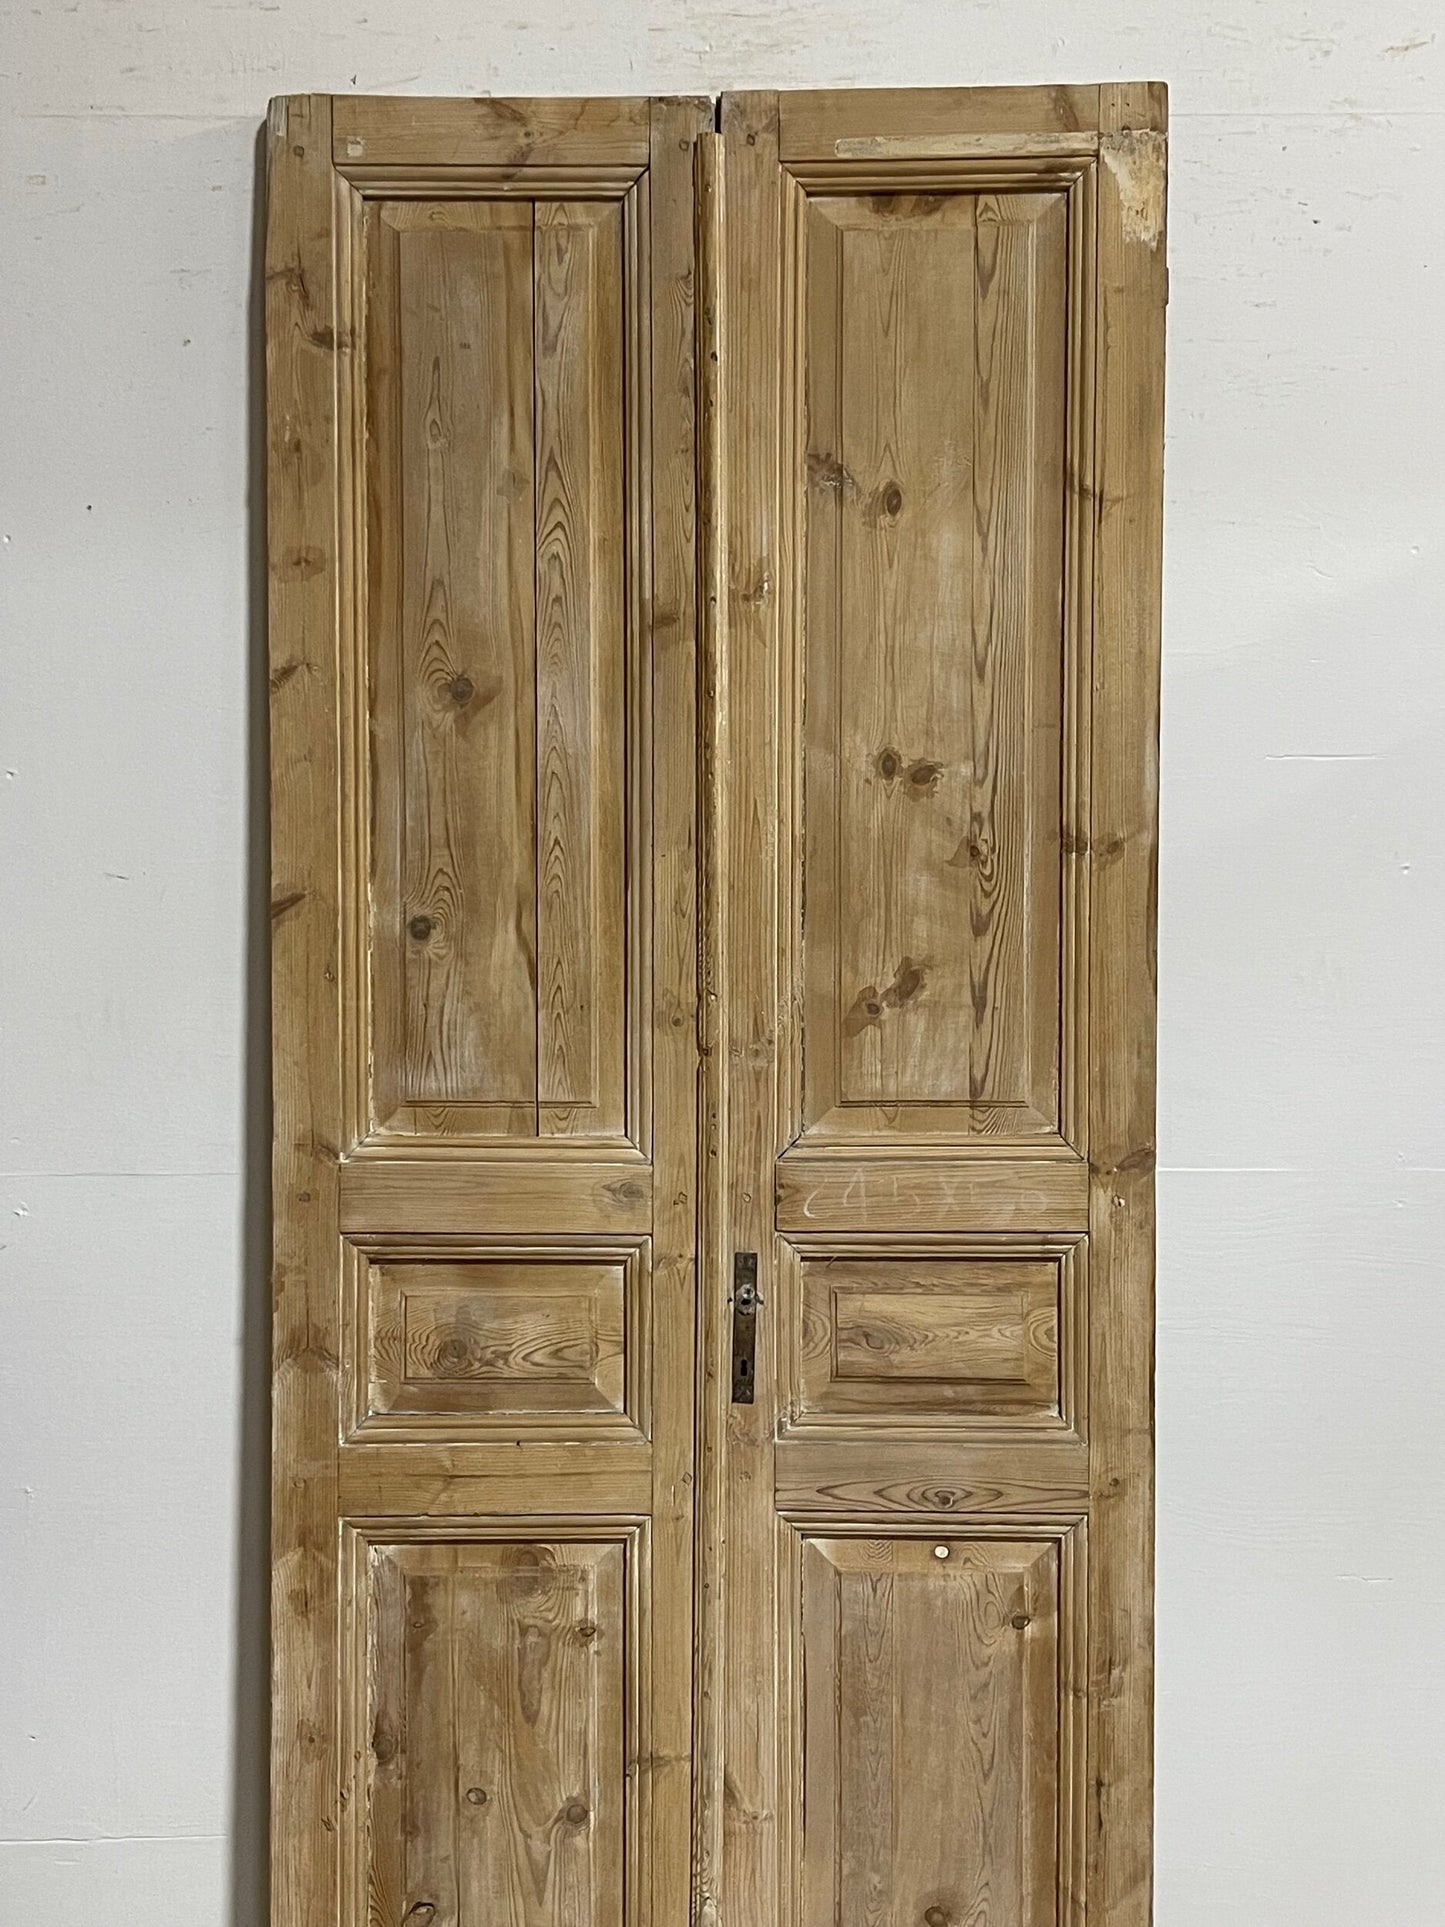 Antique French doors (96x39.75) H0139s